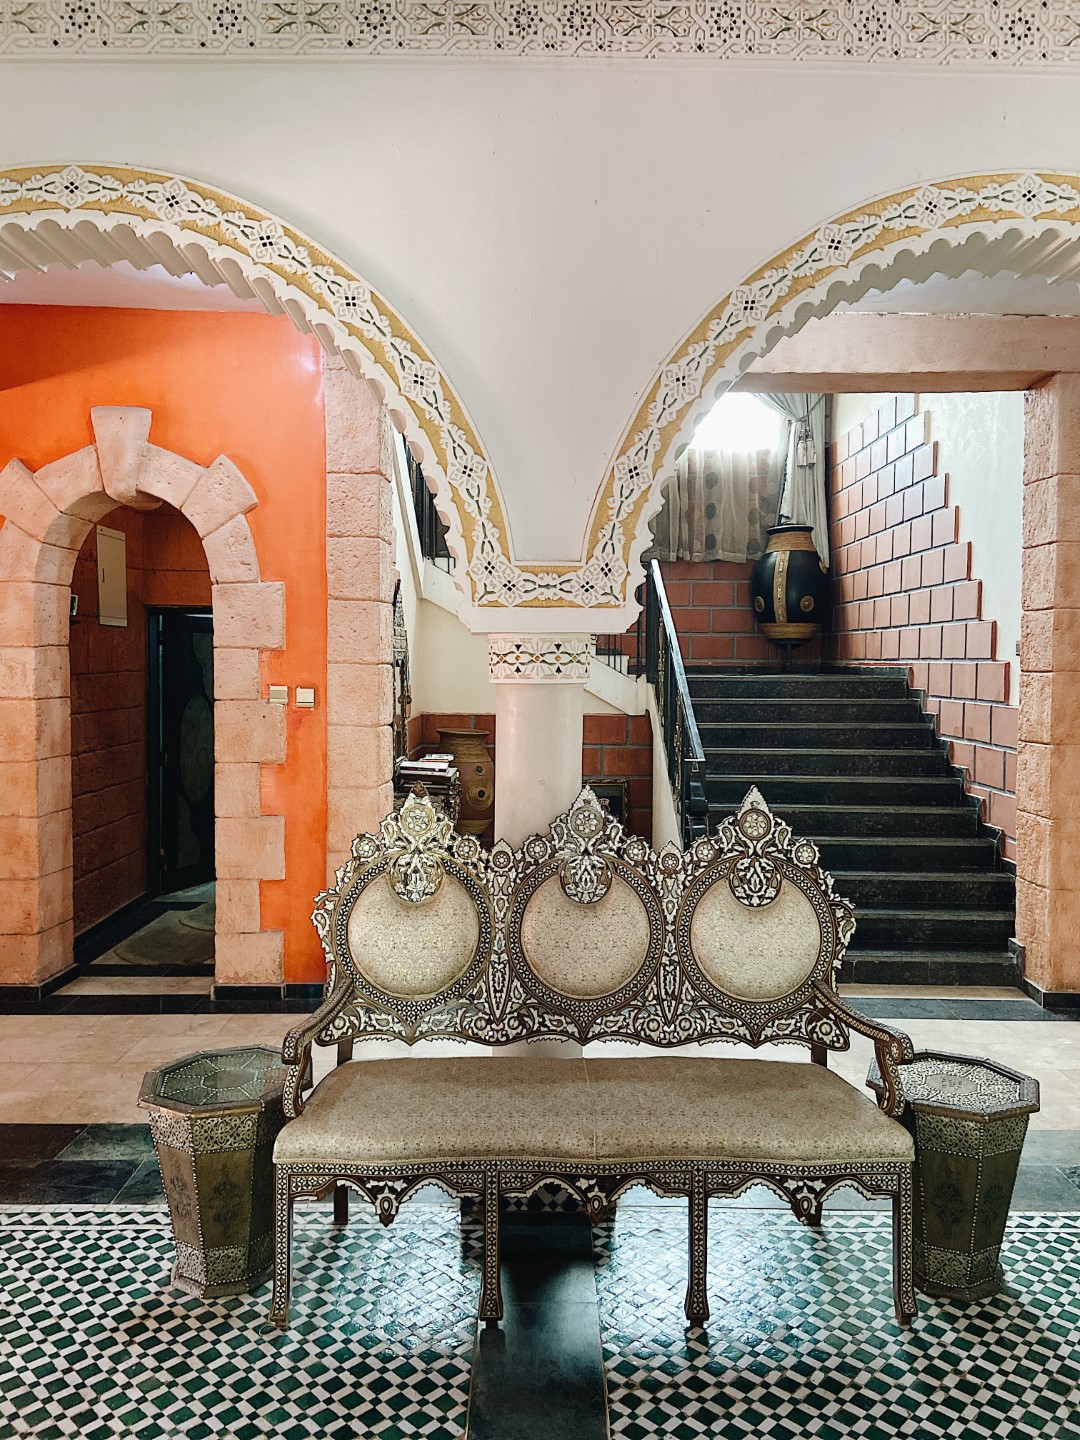 Moroccan style interior designat ned nwoko resort in delta state